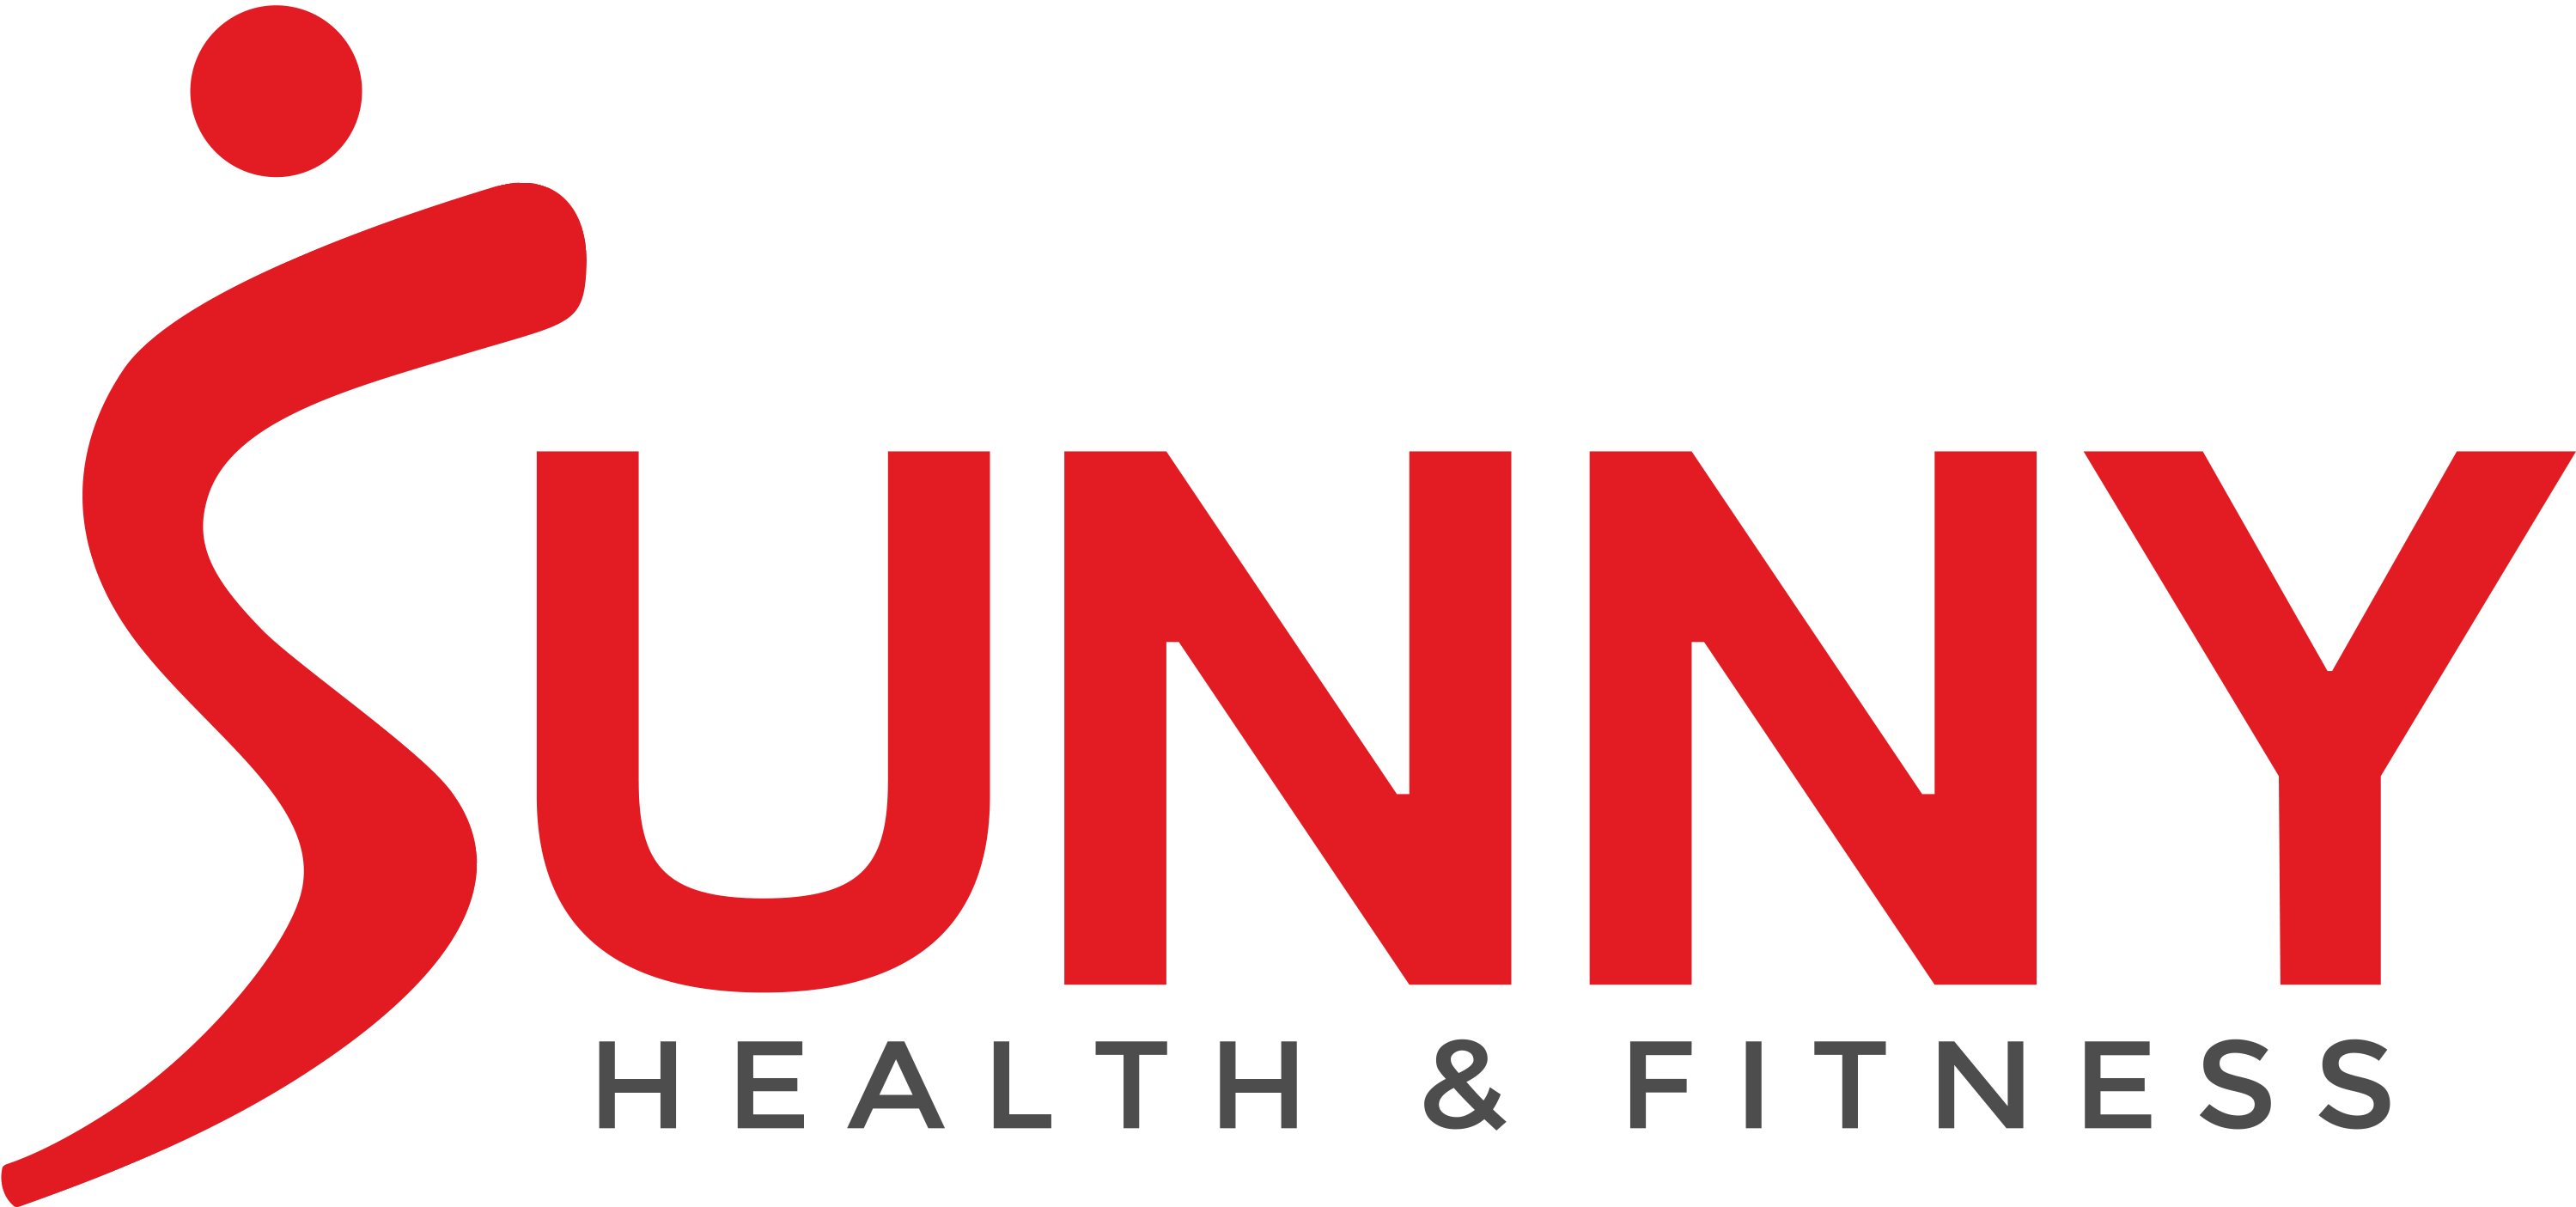 Sunny health & Fitness Homepage